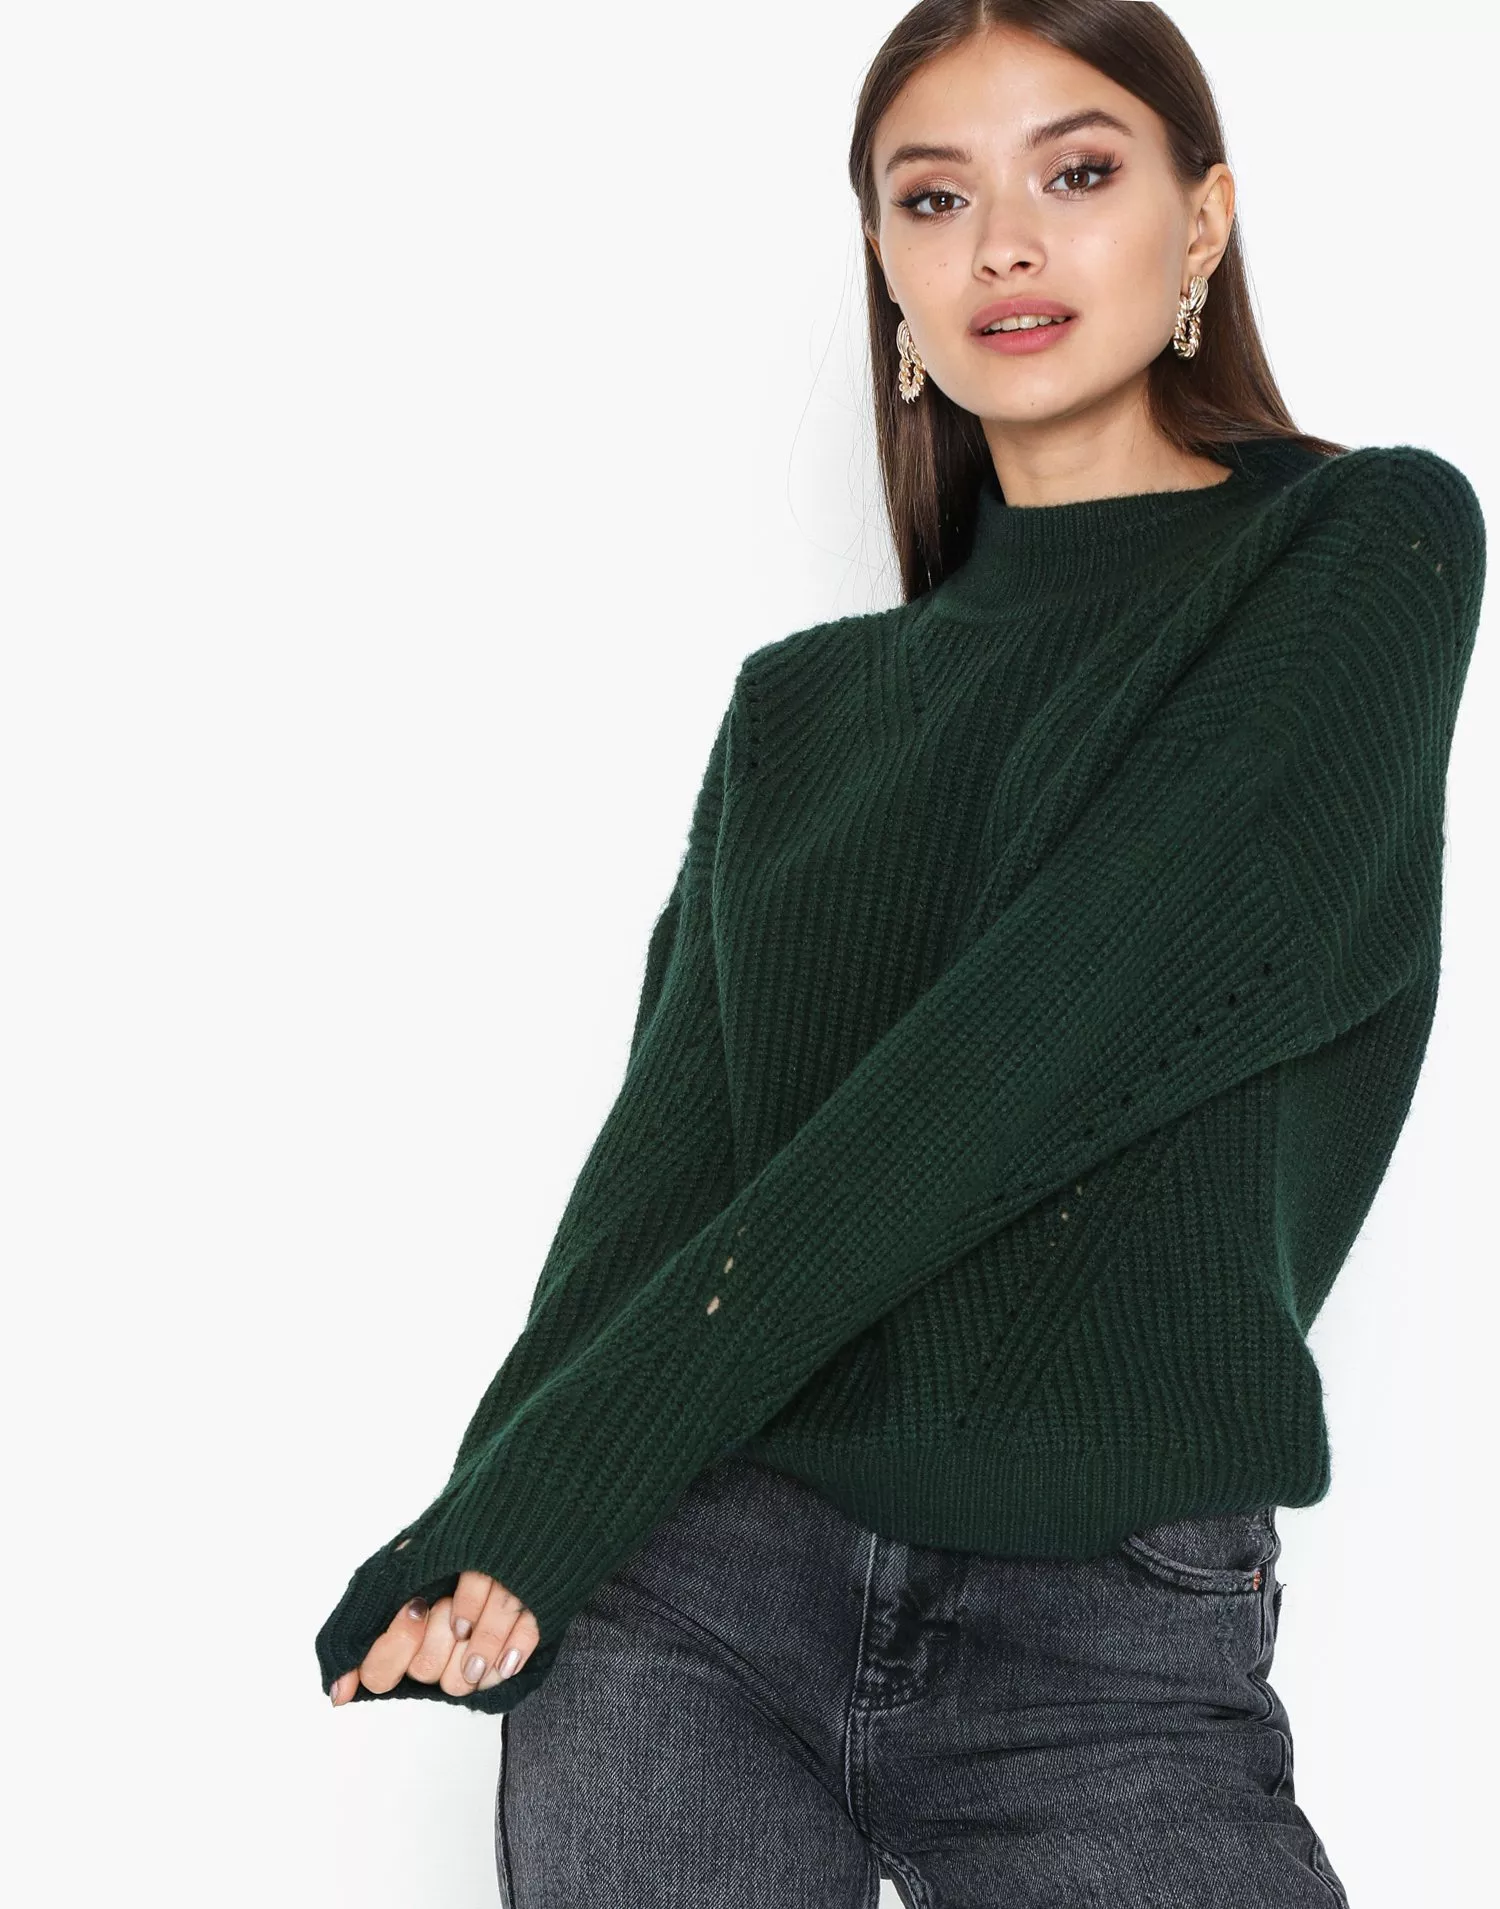 Oversized Turtleneck Sweaters Turtleneck Long Sleeve Top, 52% OFF